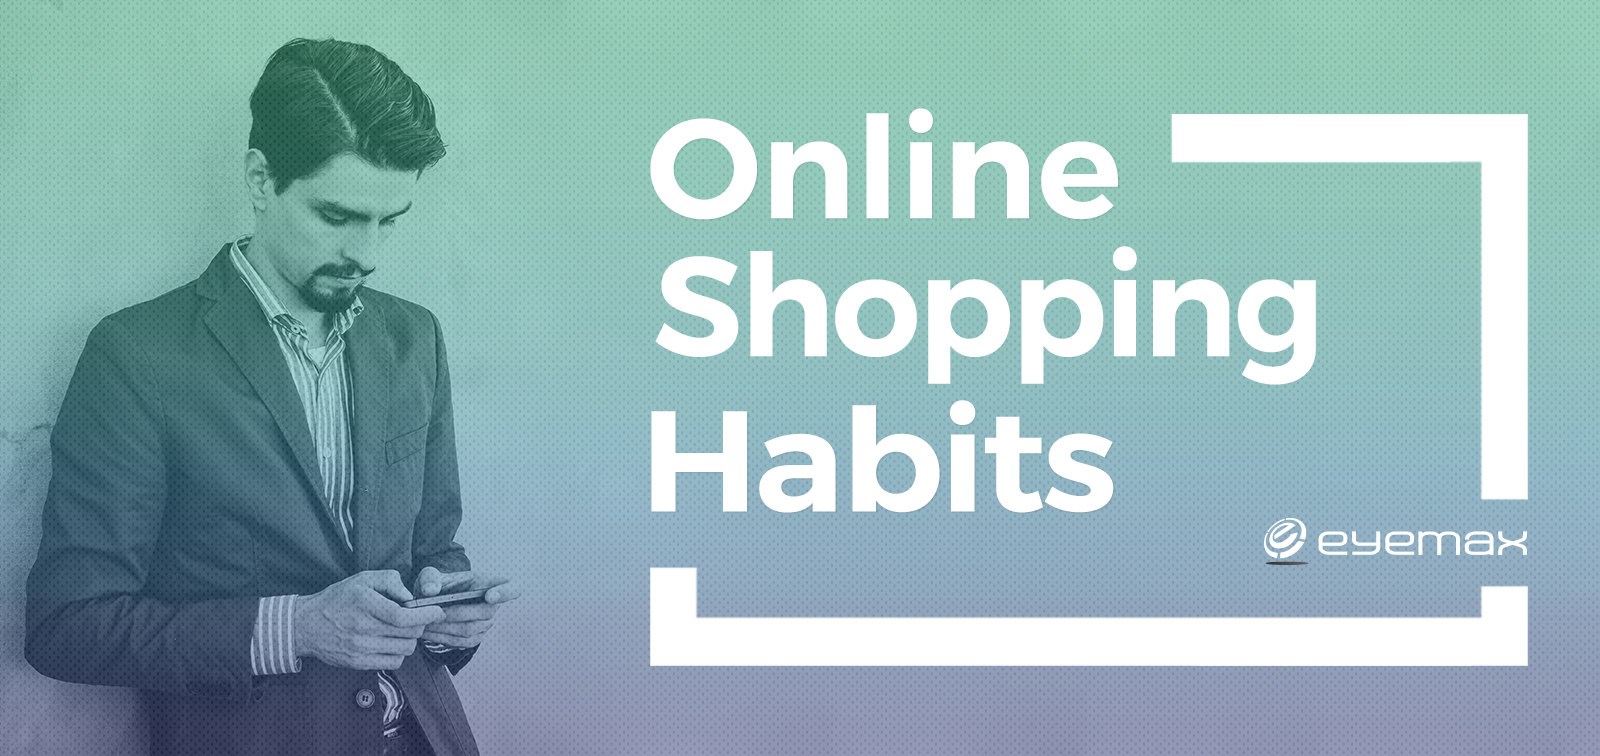 Online Shopping Habits